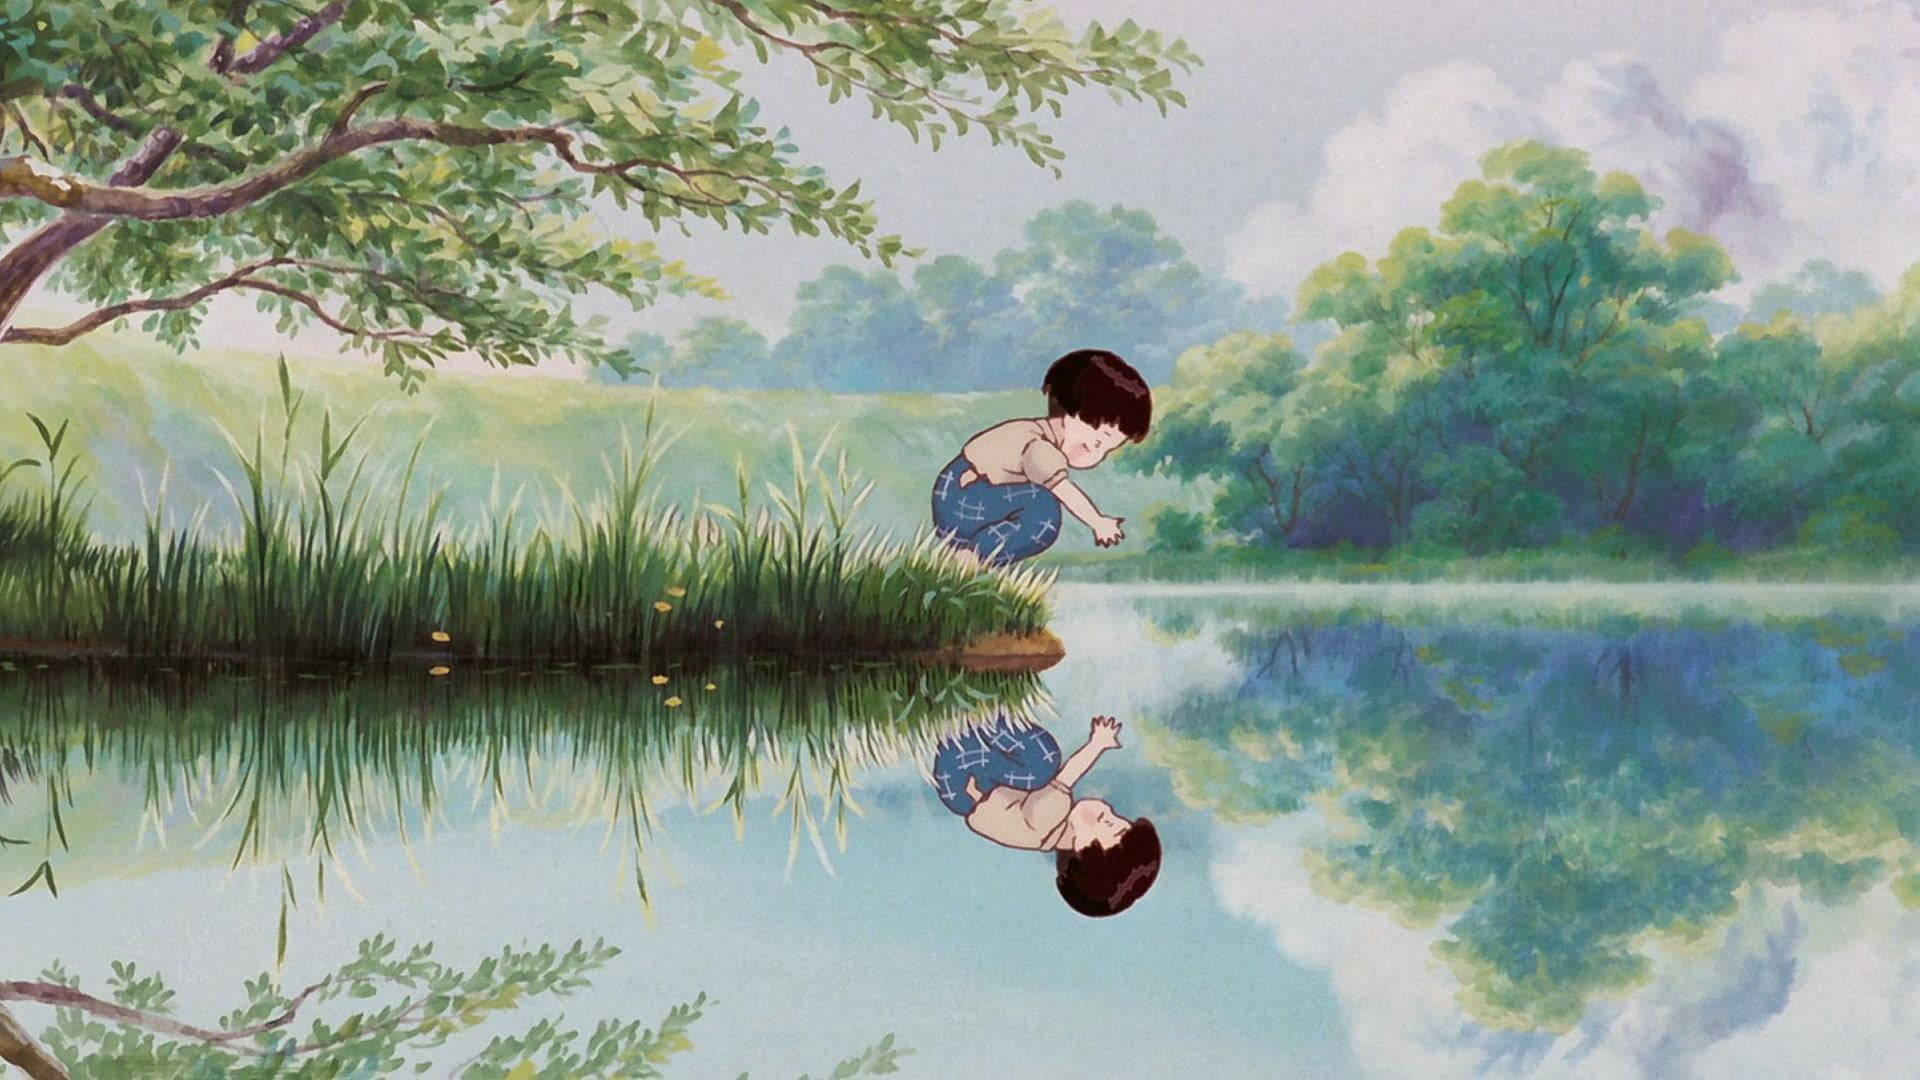 Studio Ghibli Scenery Of Water Reflection Wallpaper